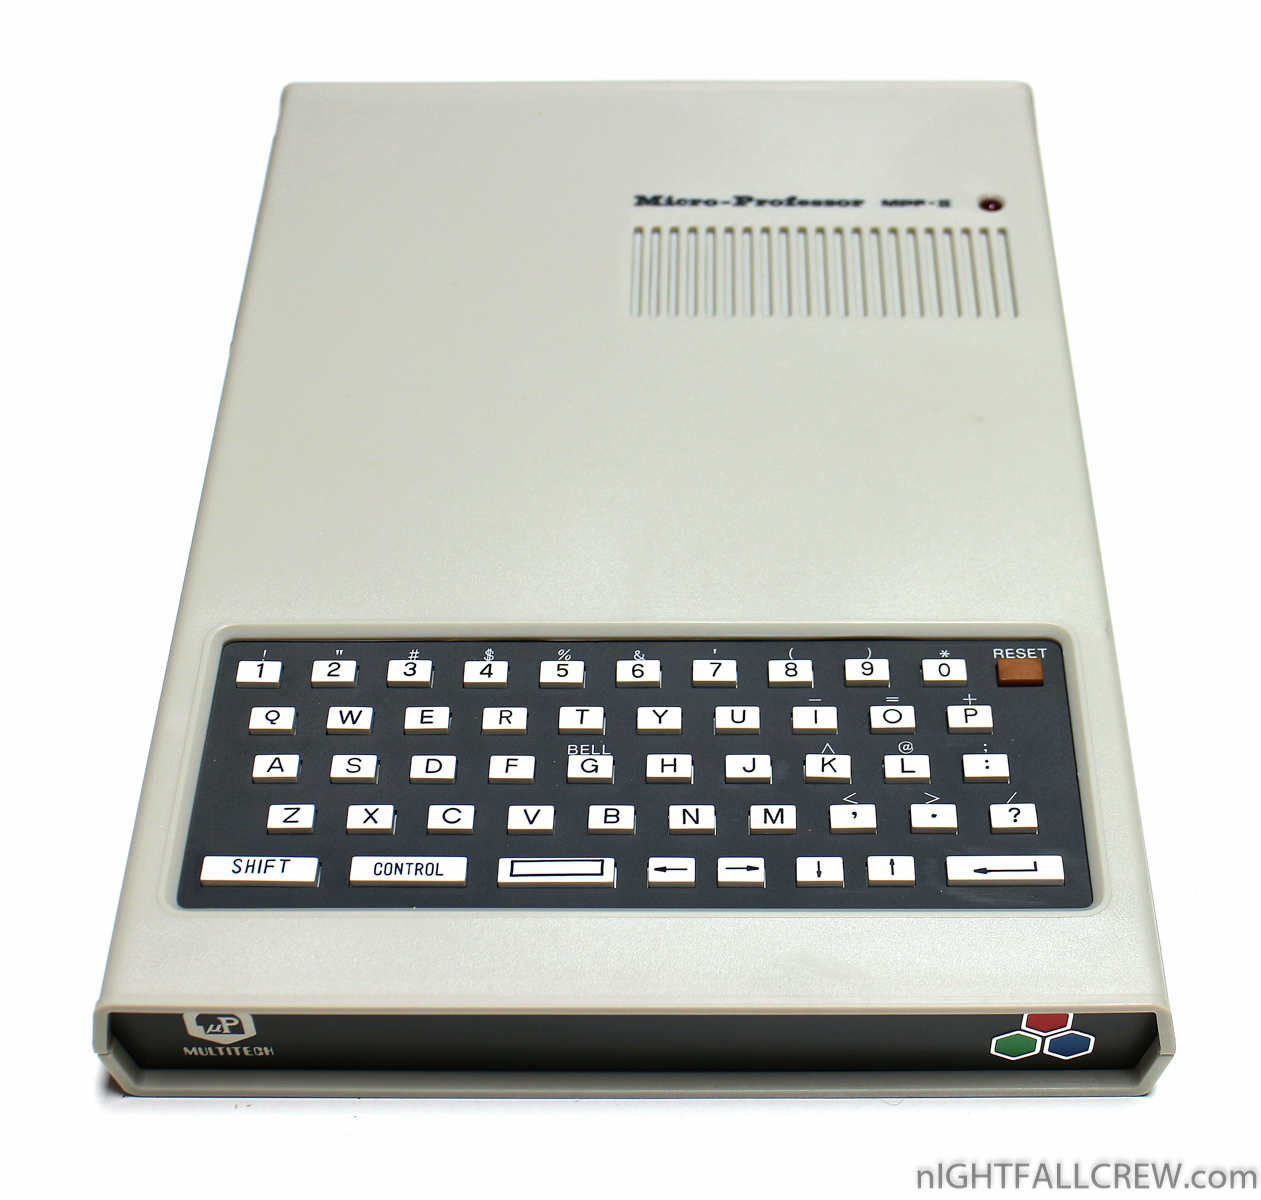 TK-2000 Color Computer